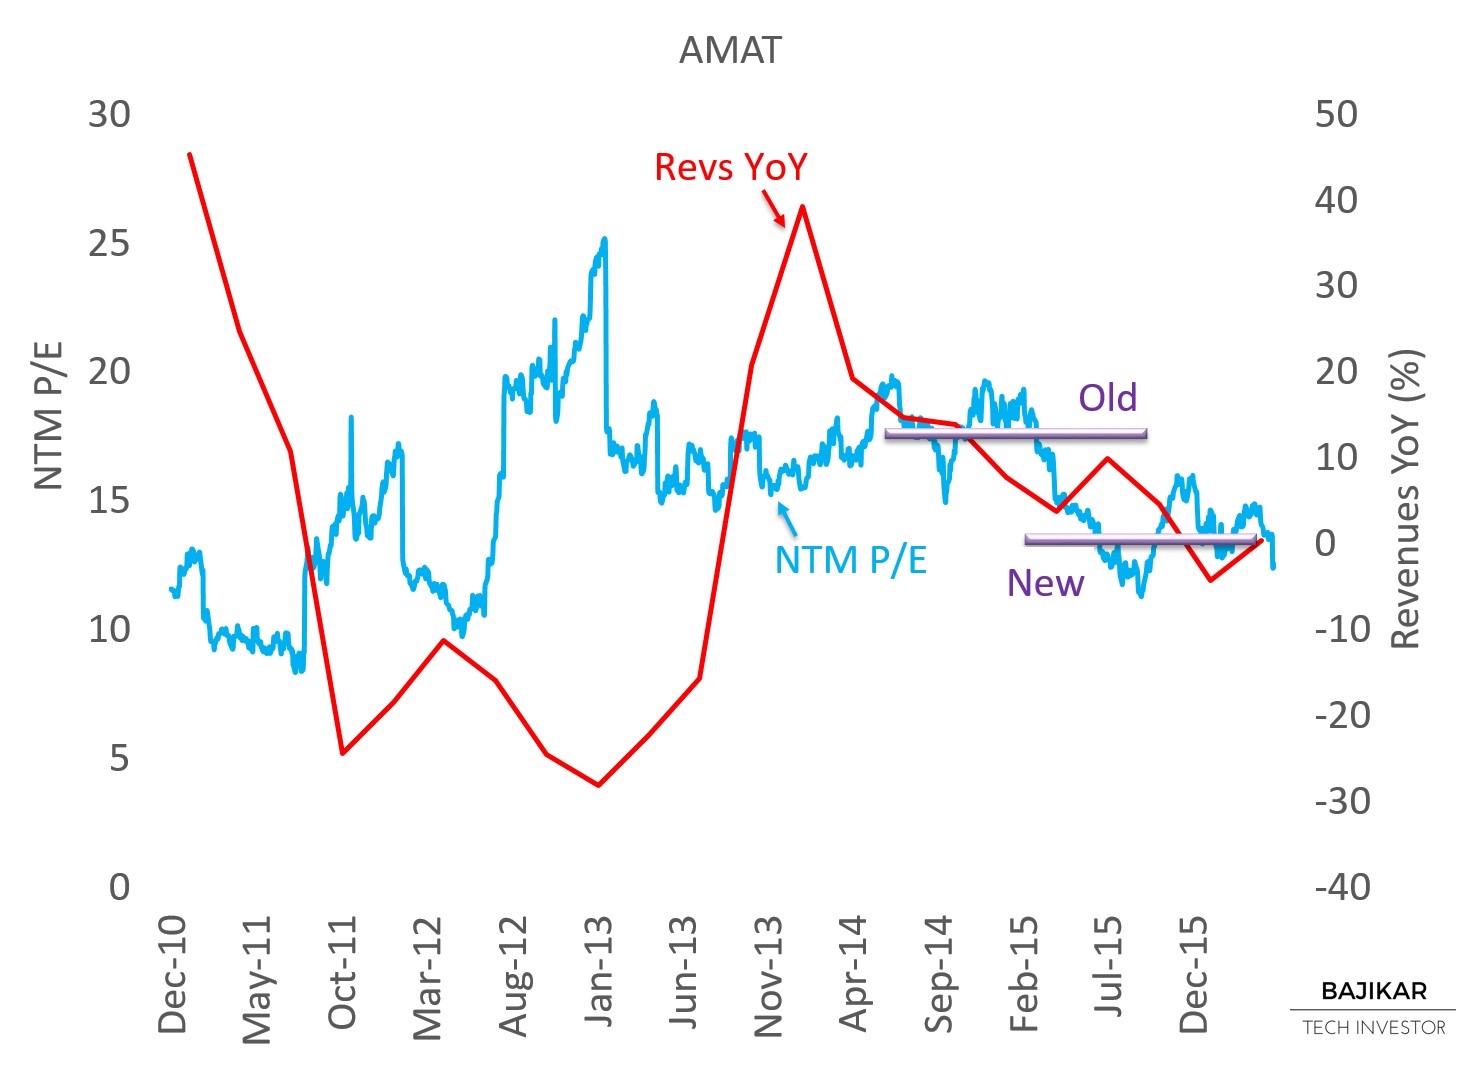 AMAT NTM P/E vs. YoY Revenues